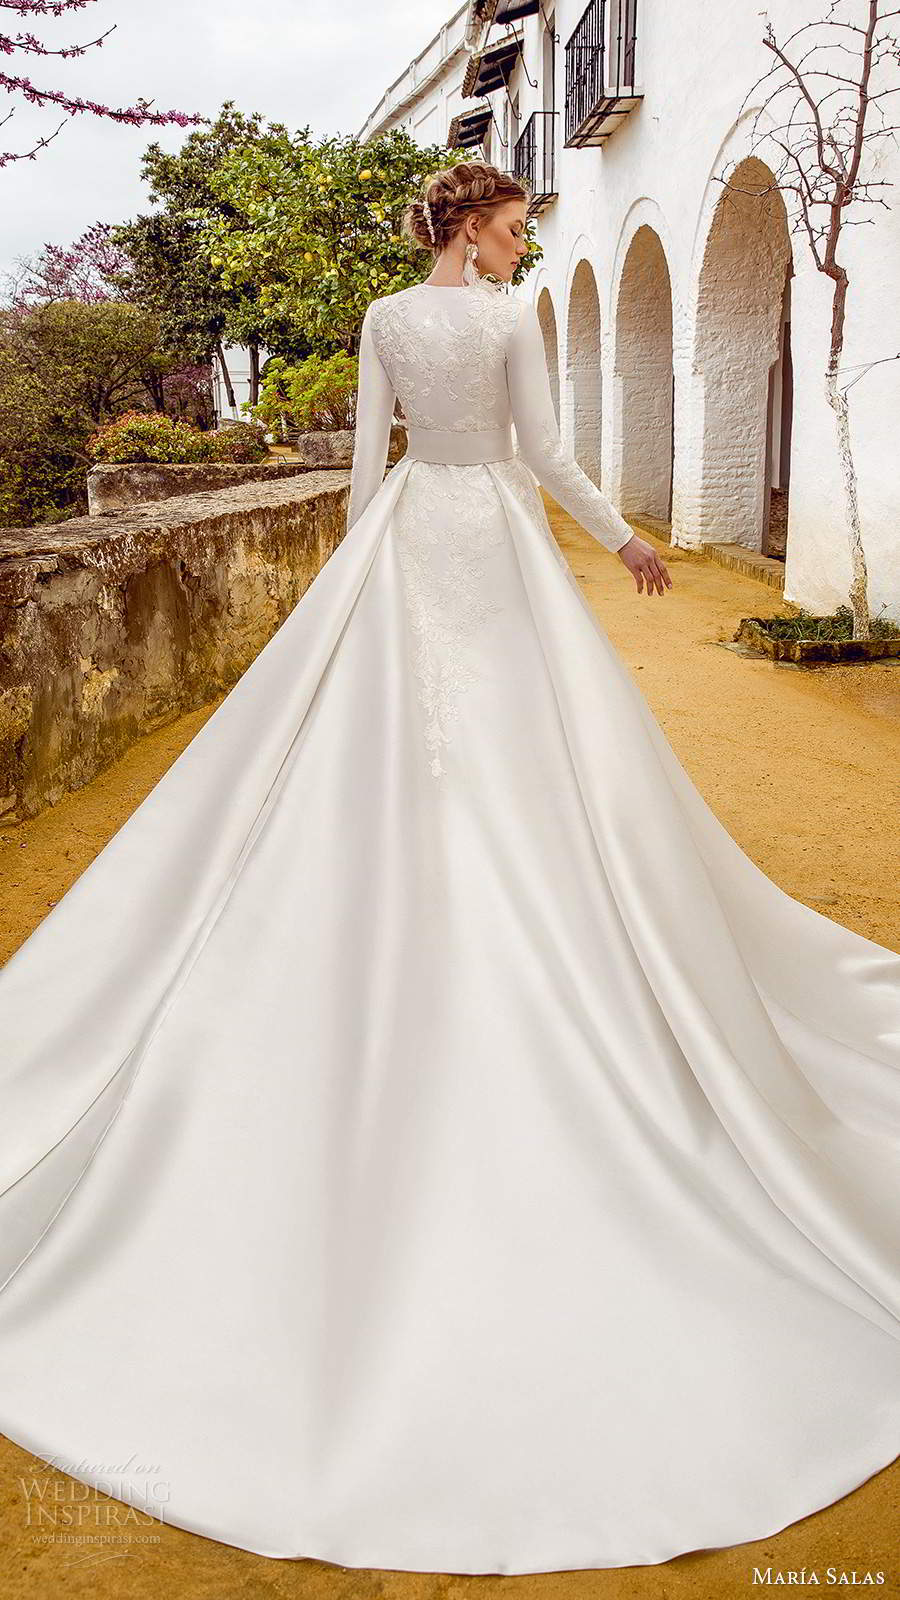 maria salas 2019 bridal sleeveless straps sweetheart neckline fully embellished fit flare sheath lace wedding dress chapel train jacket (13) bv